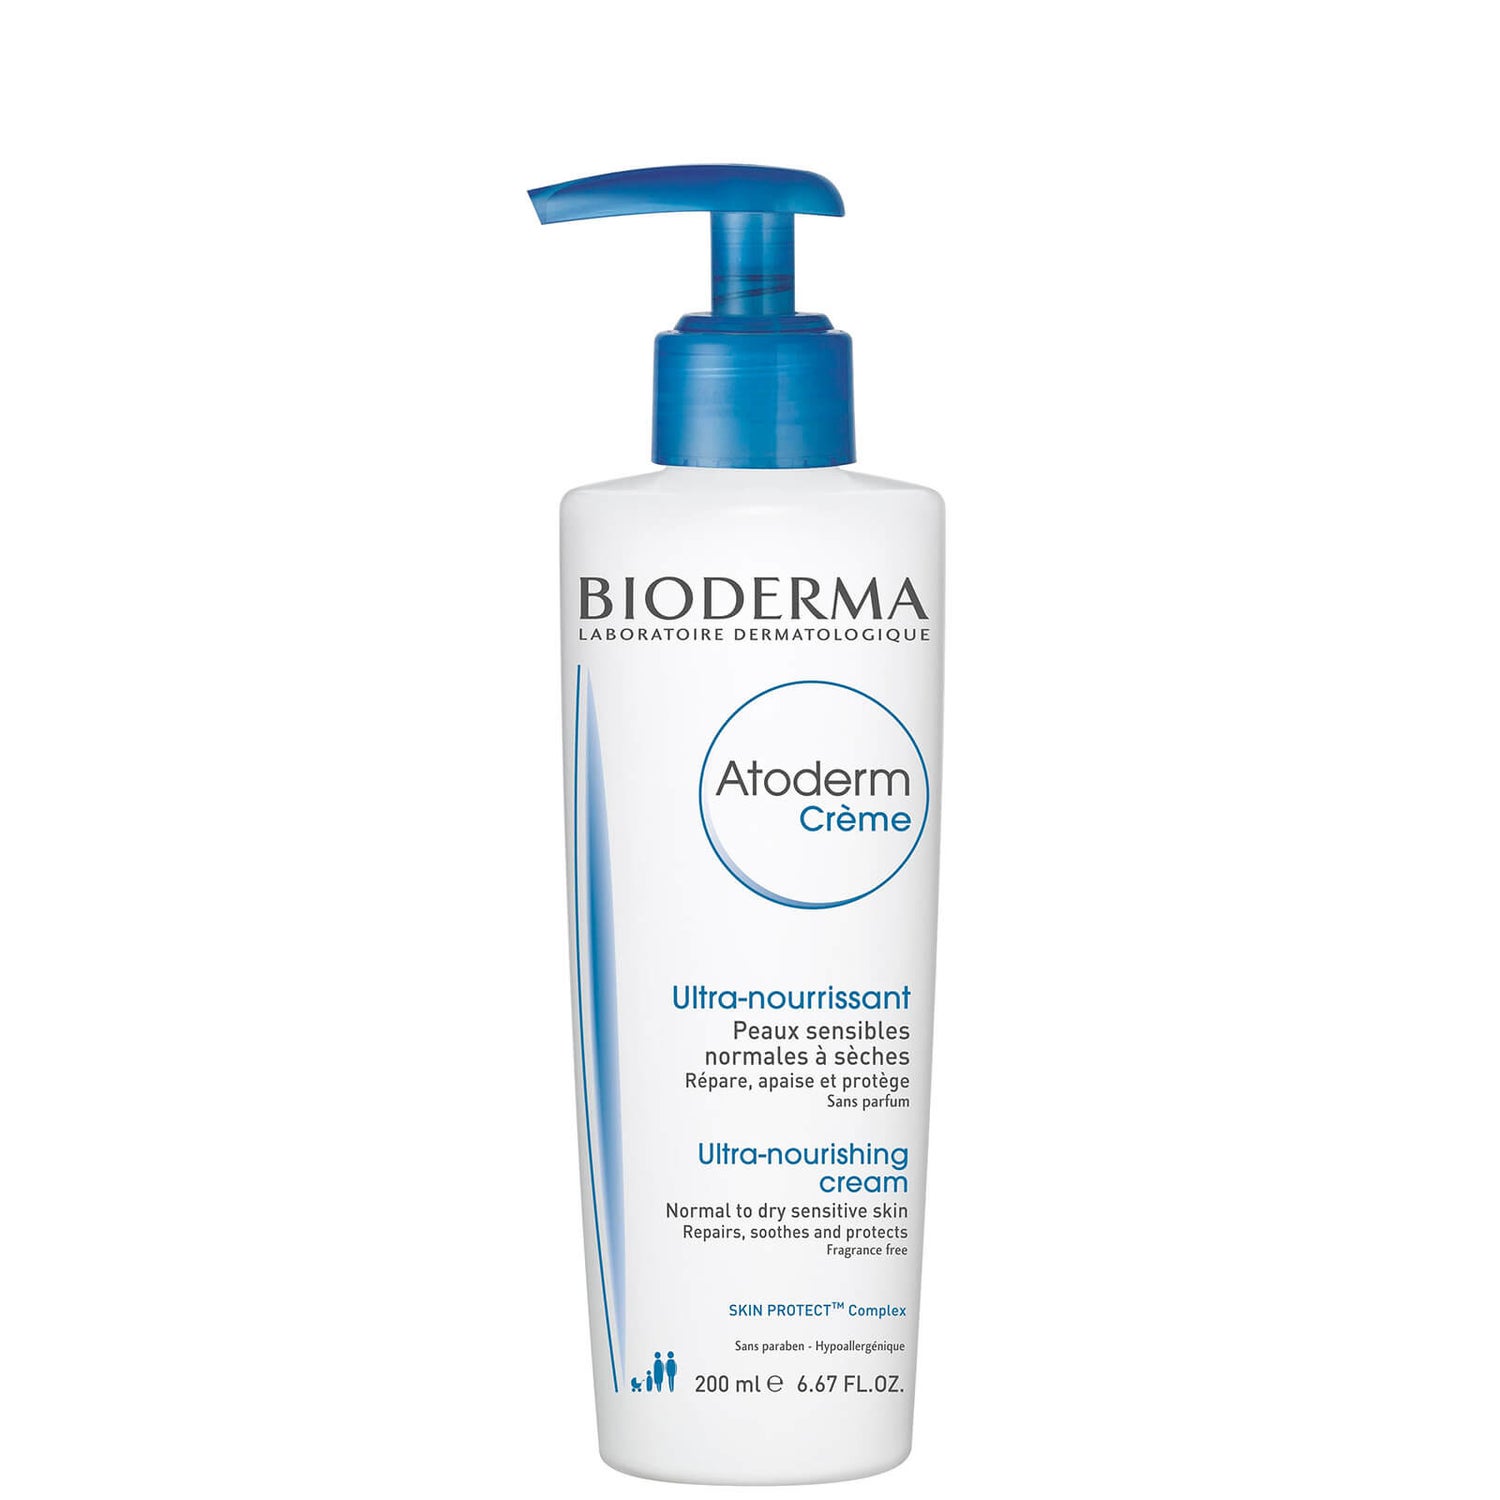 Bioderma Atoderm Creme trattamento quotidiano ultra-nutriente per pelle da normale a secca.